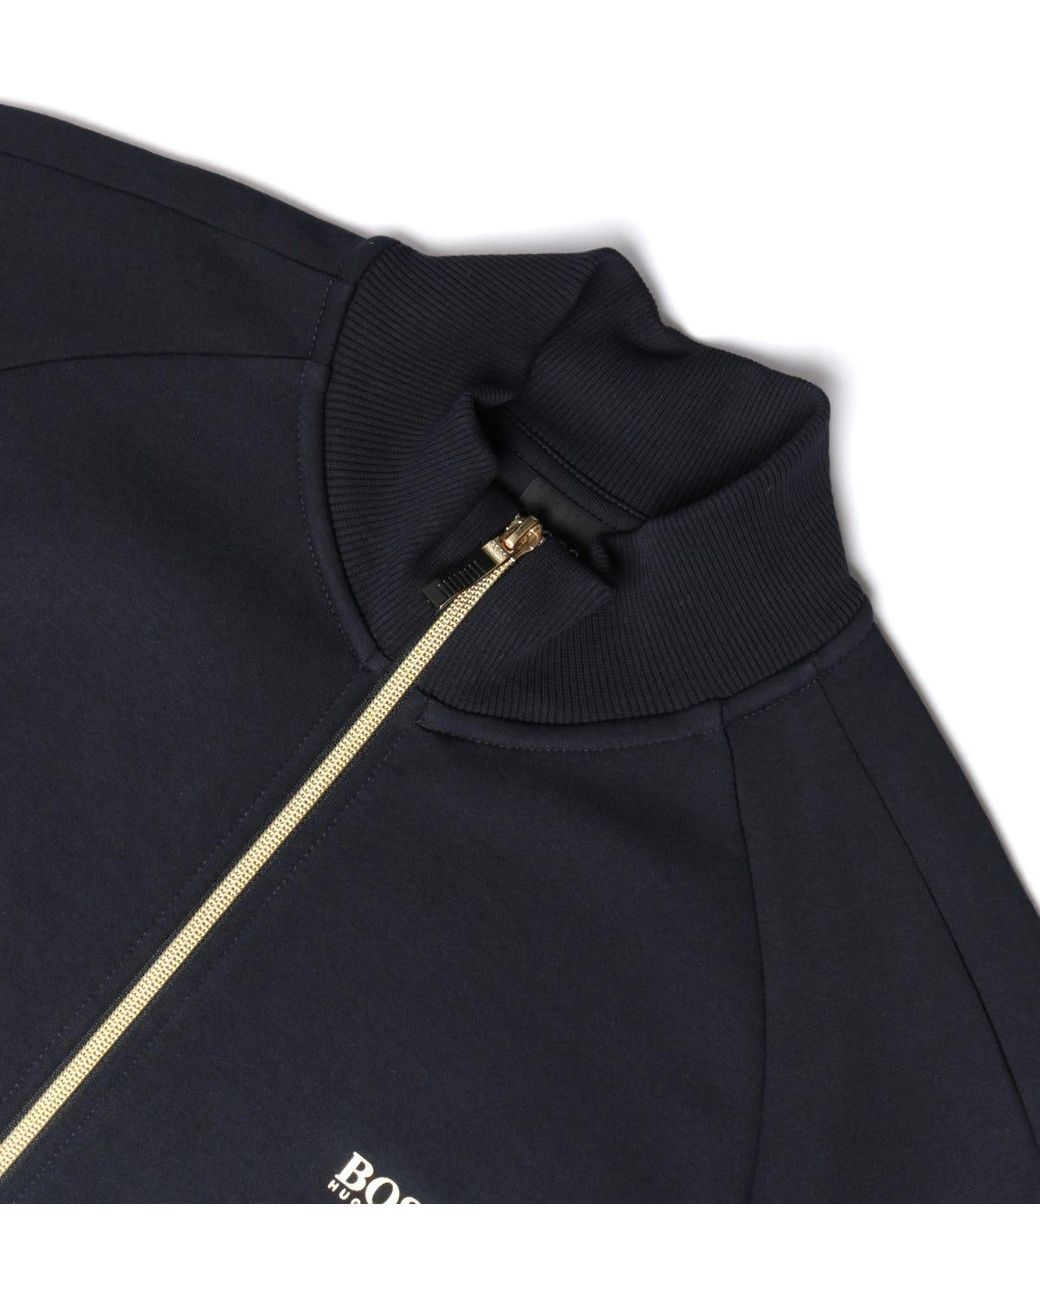 BOSS by HUGO BOSS Skaz 1 Zip Through Navy & Gold Sweatshirt in Blue for Men  | Lyst